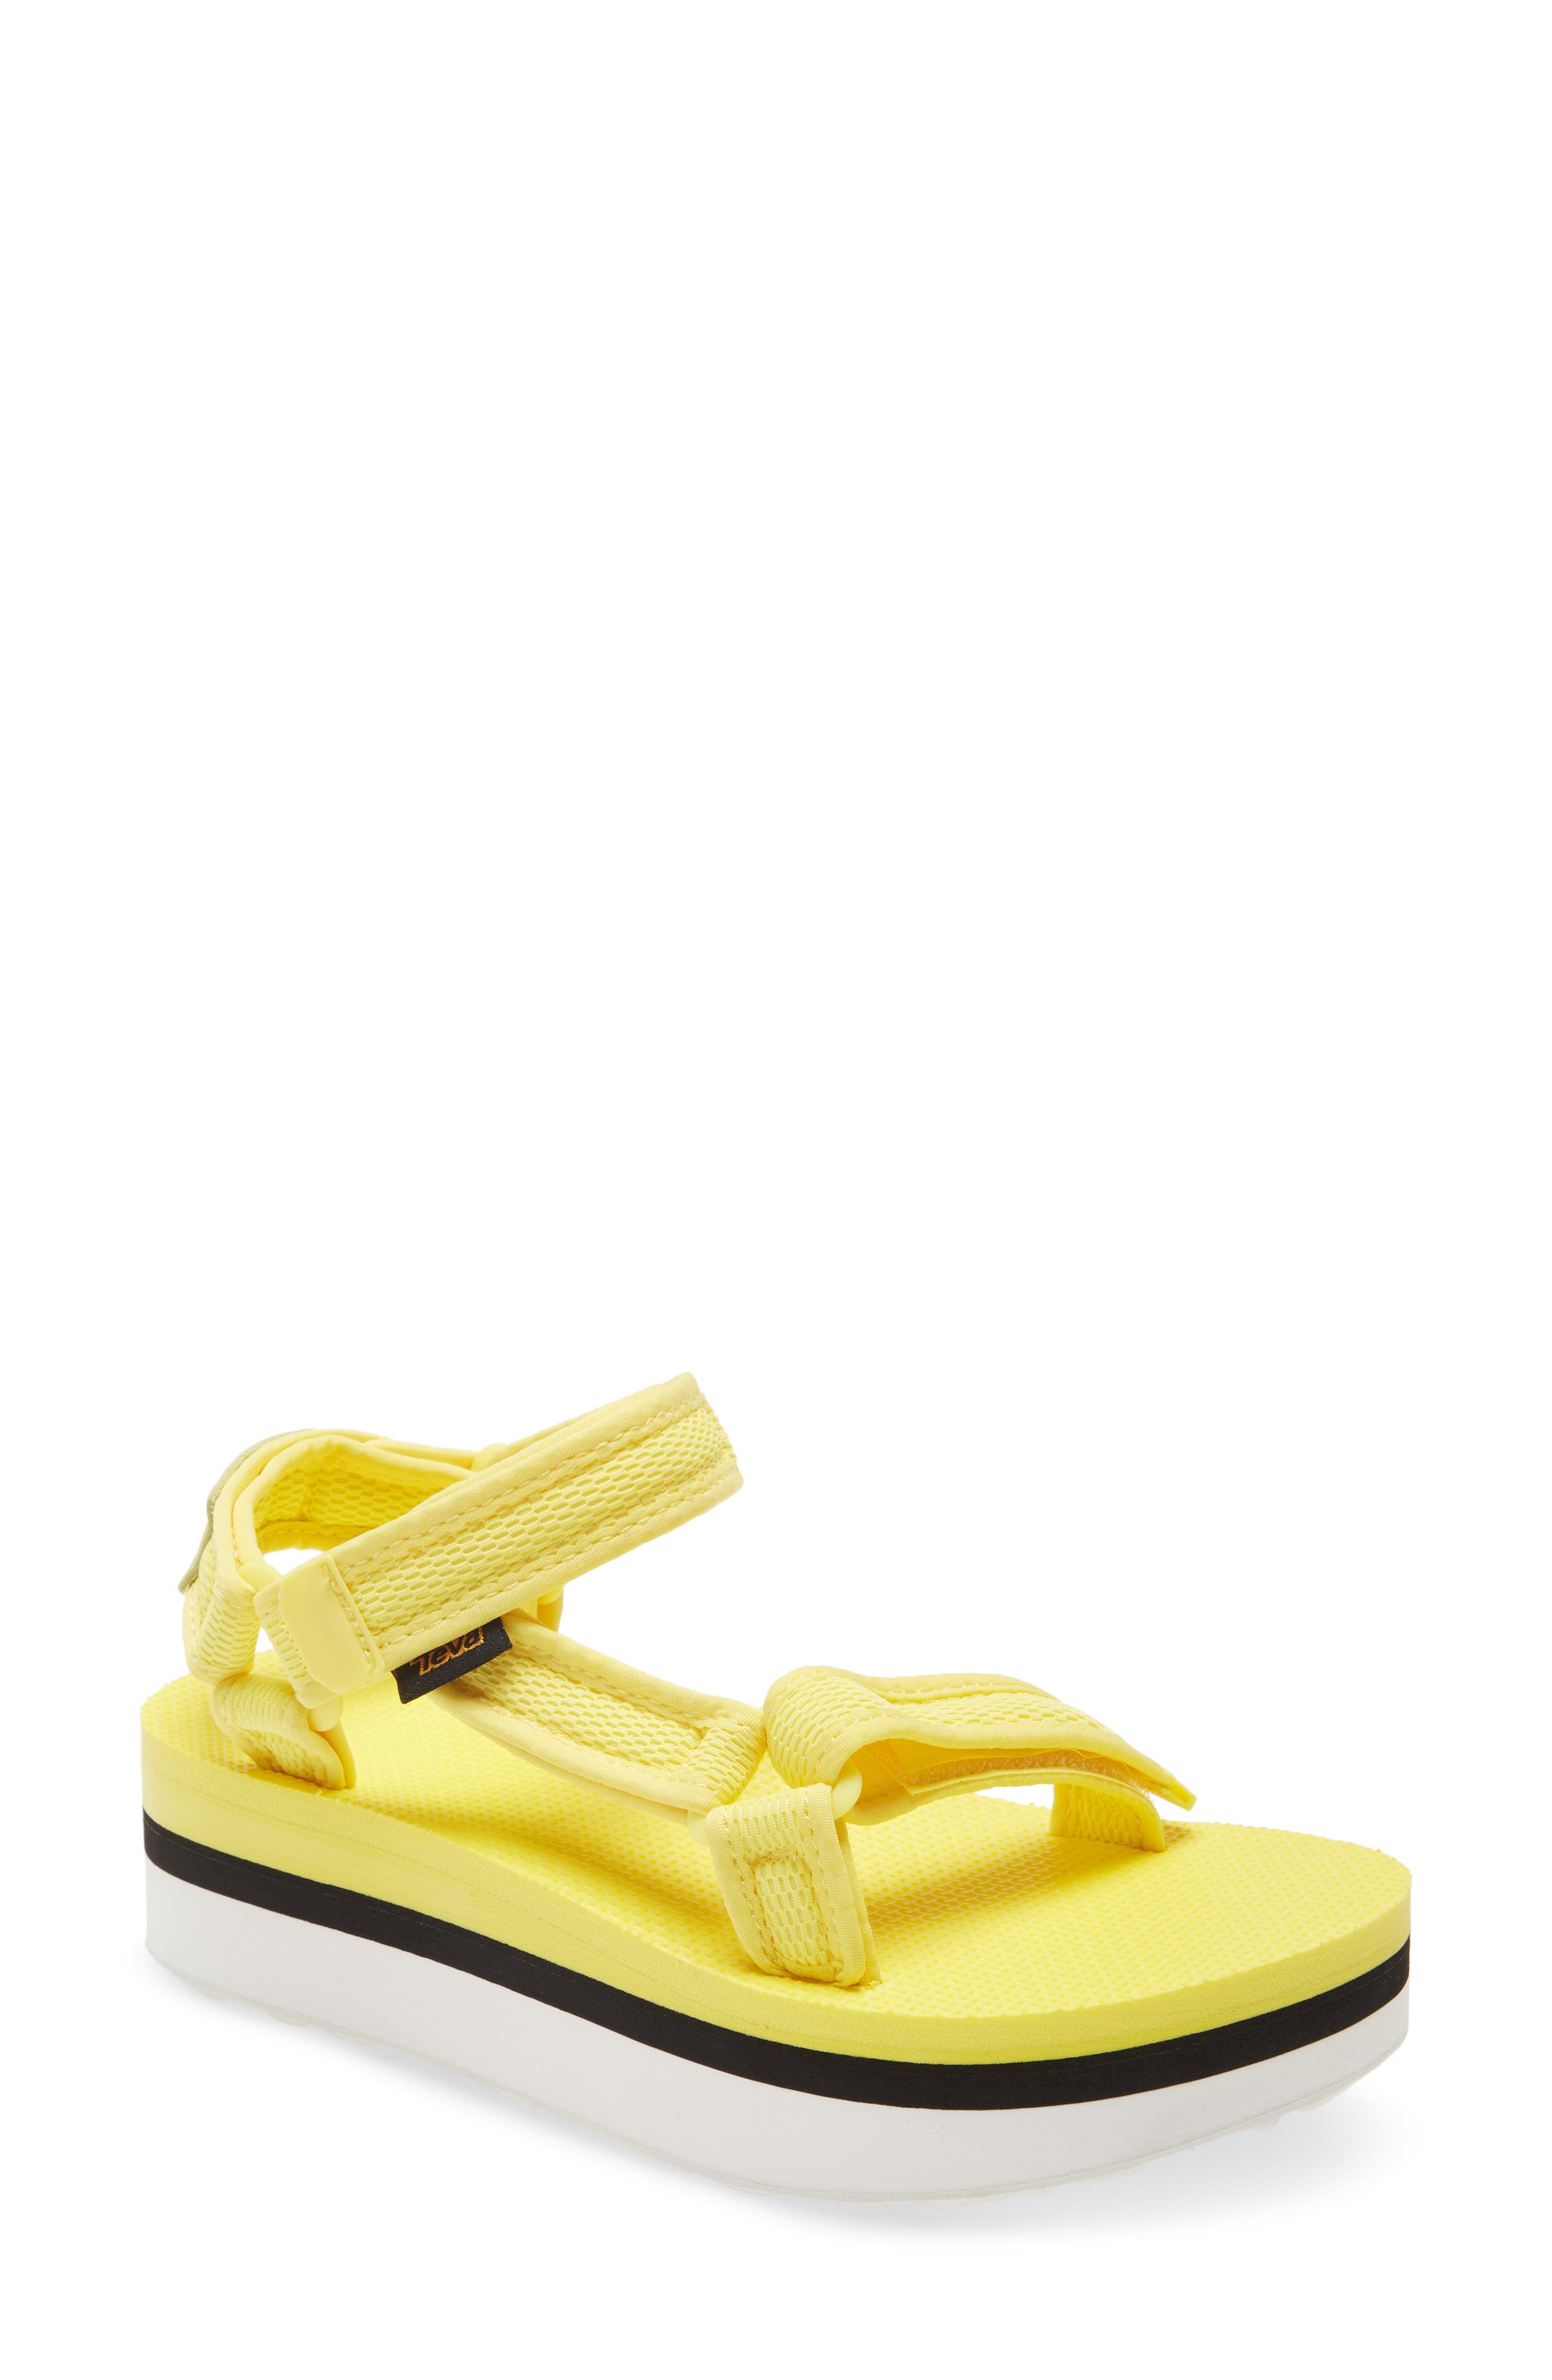 teva yellow sandals